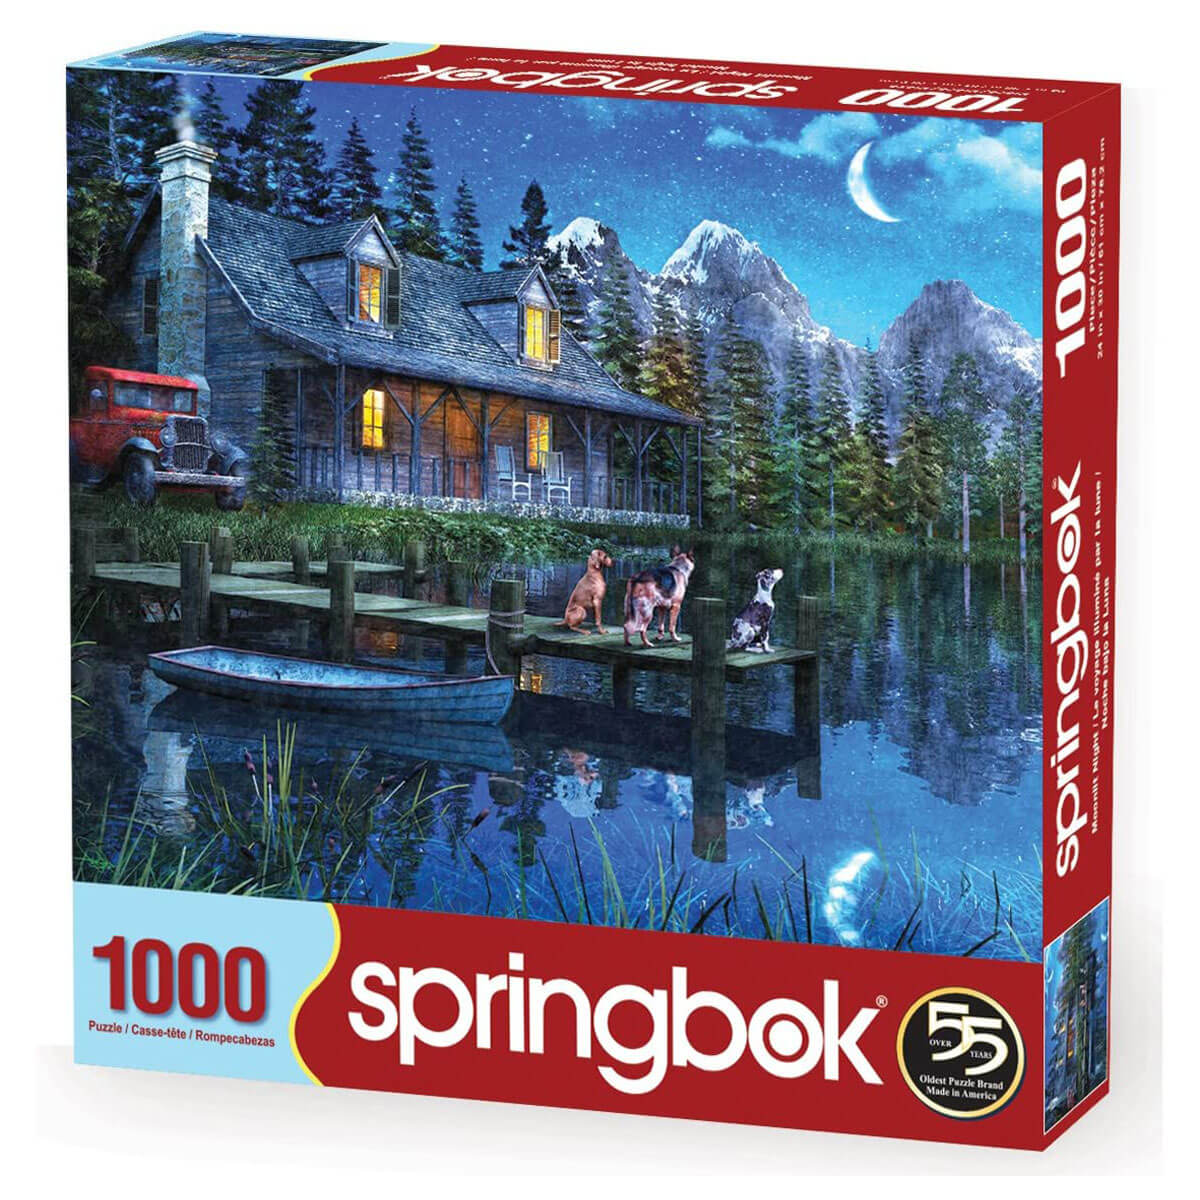 Springbok Moonlit Night 1000 Piece Jigsaw Puzzle